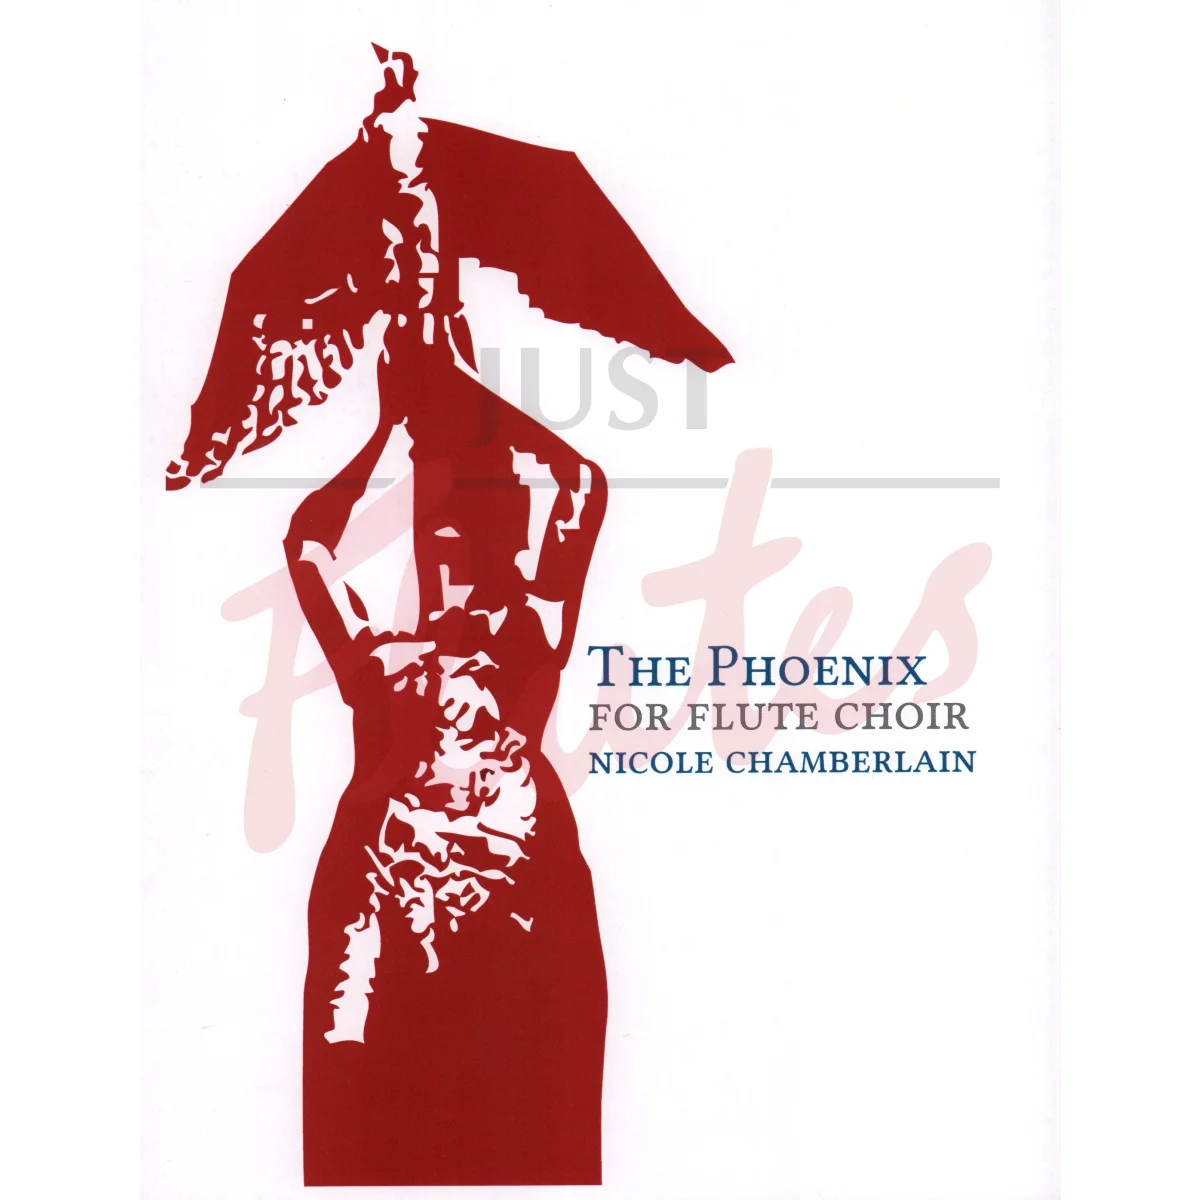 The Phoenix for Flute Choir